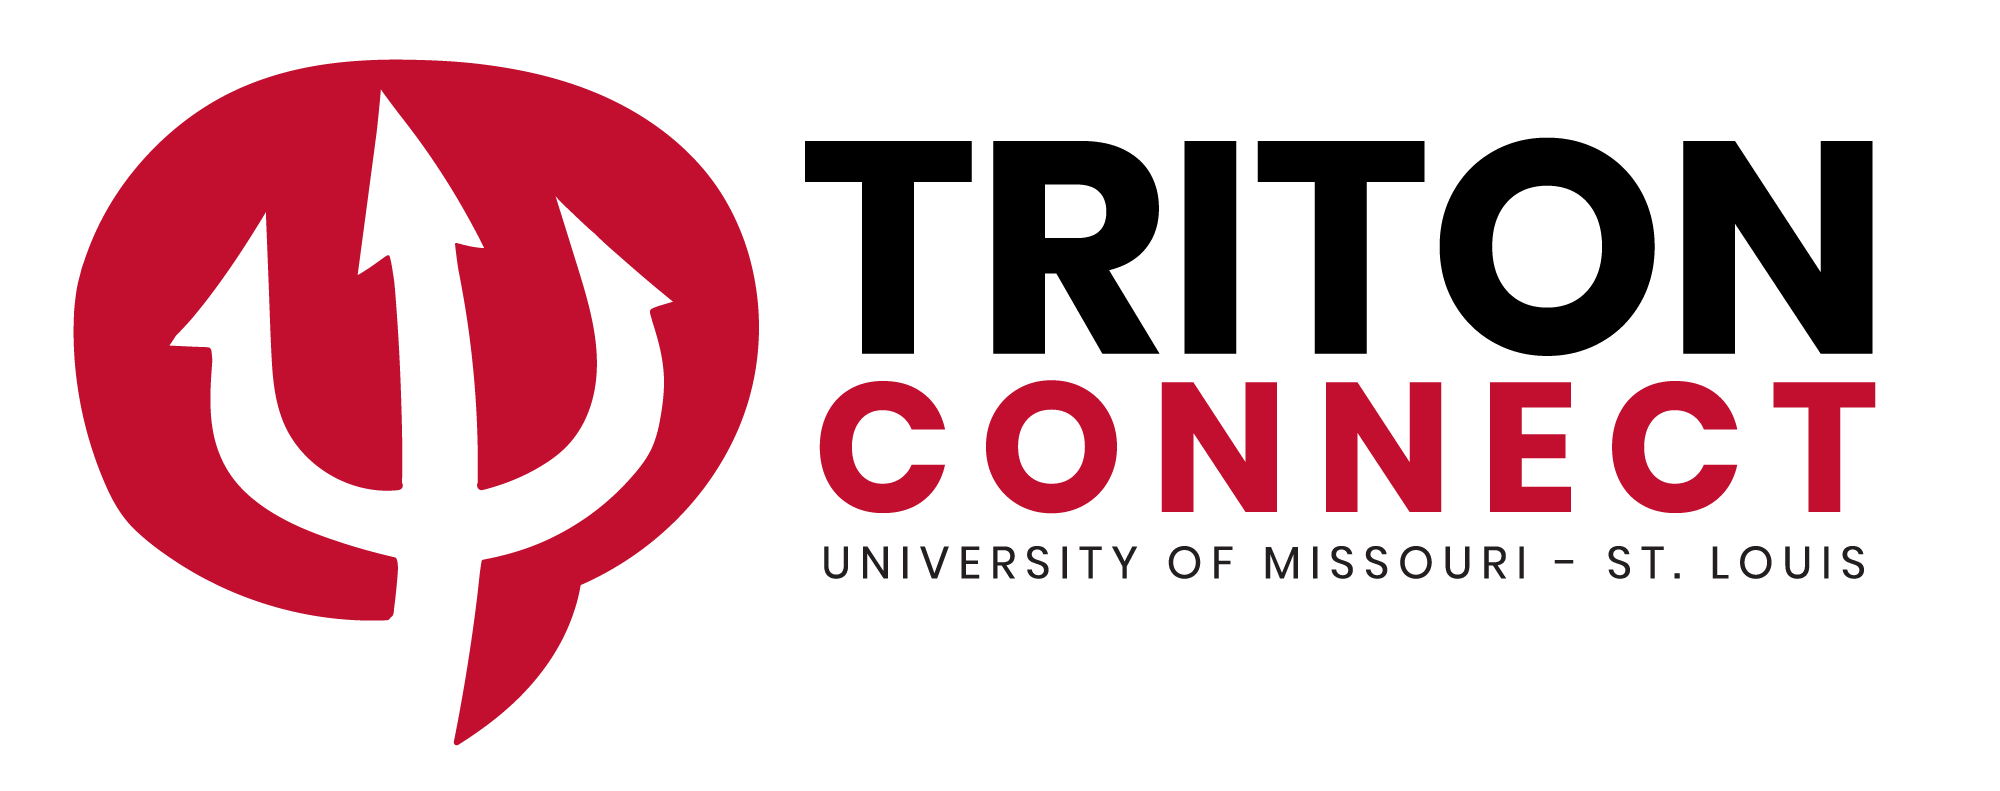 University of Missouri- St. Louis Logo Image.